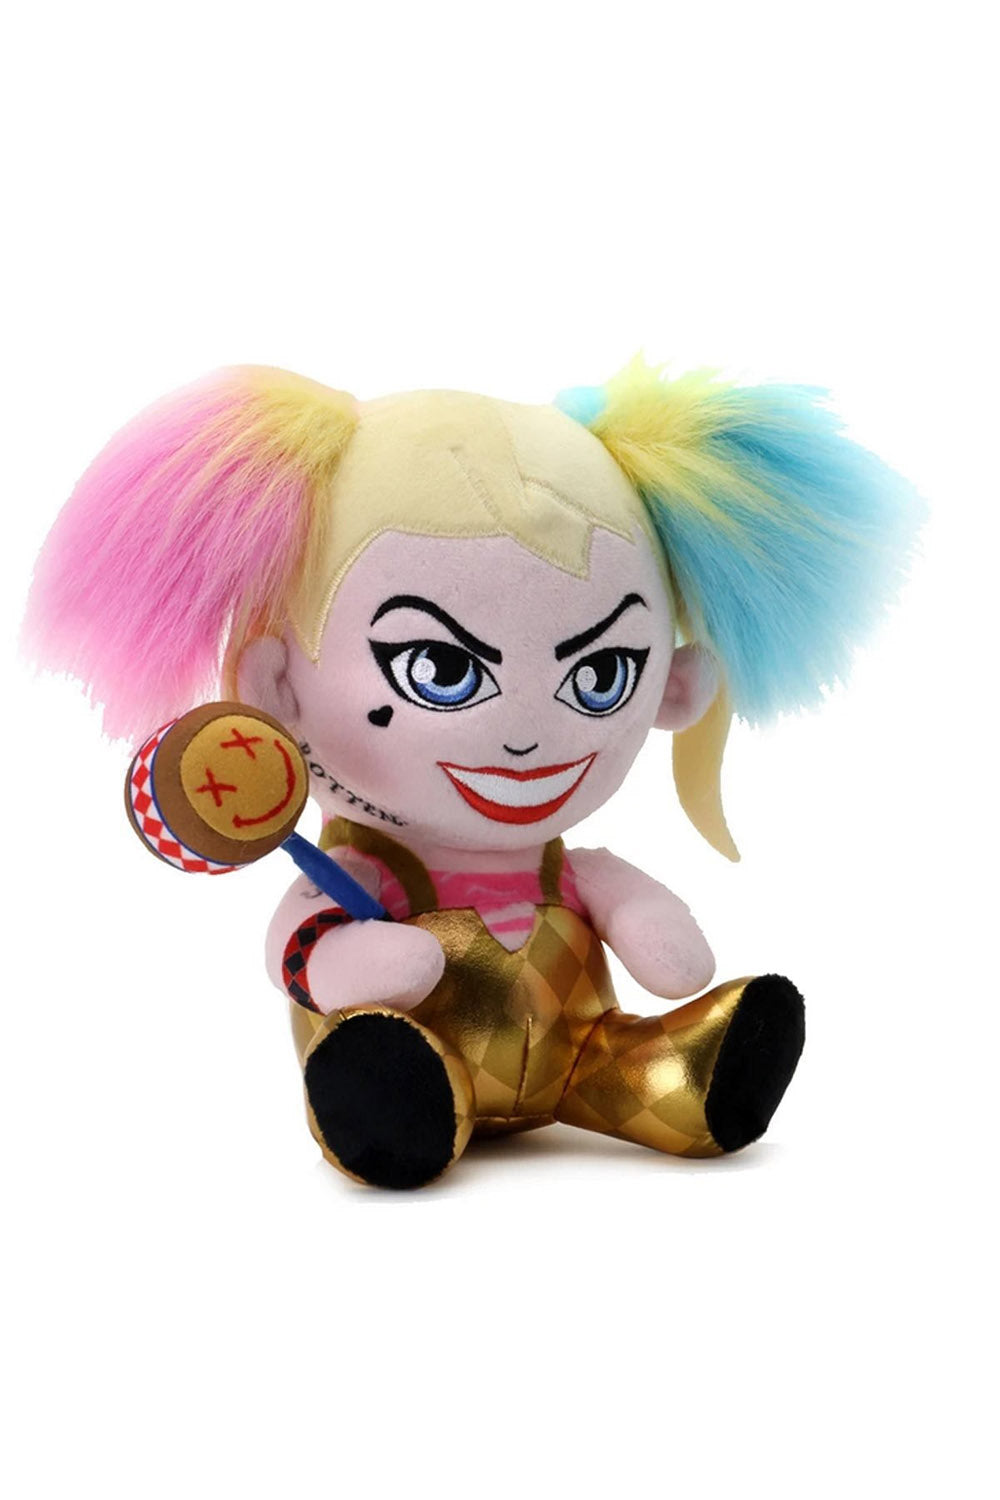 Harley Quinn Phunny Plush Toy